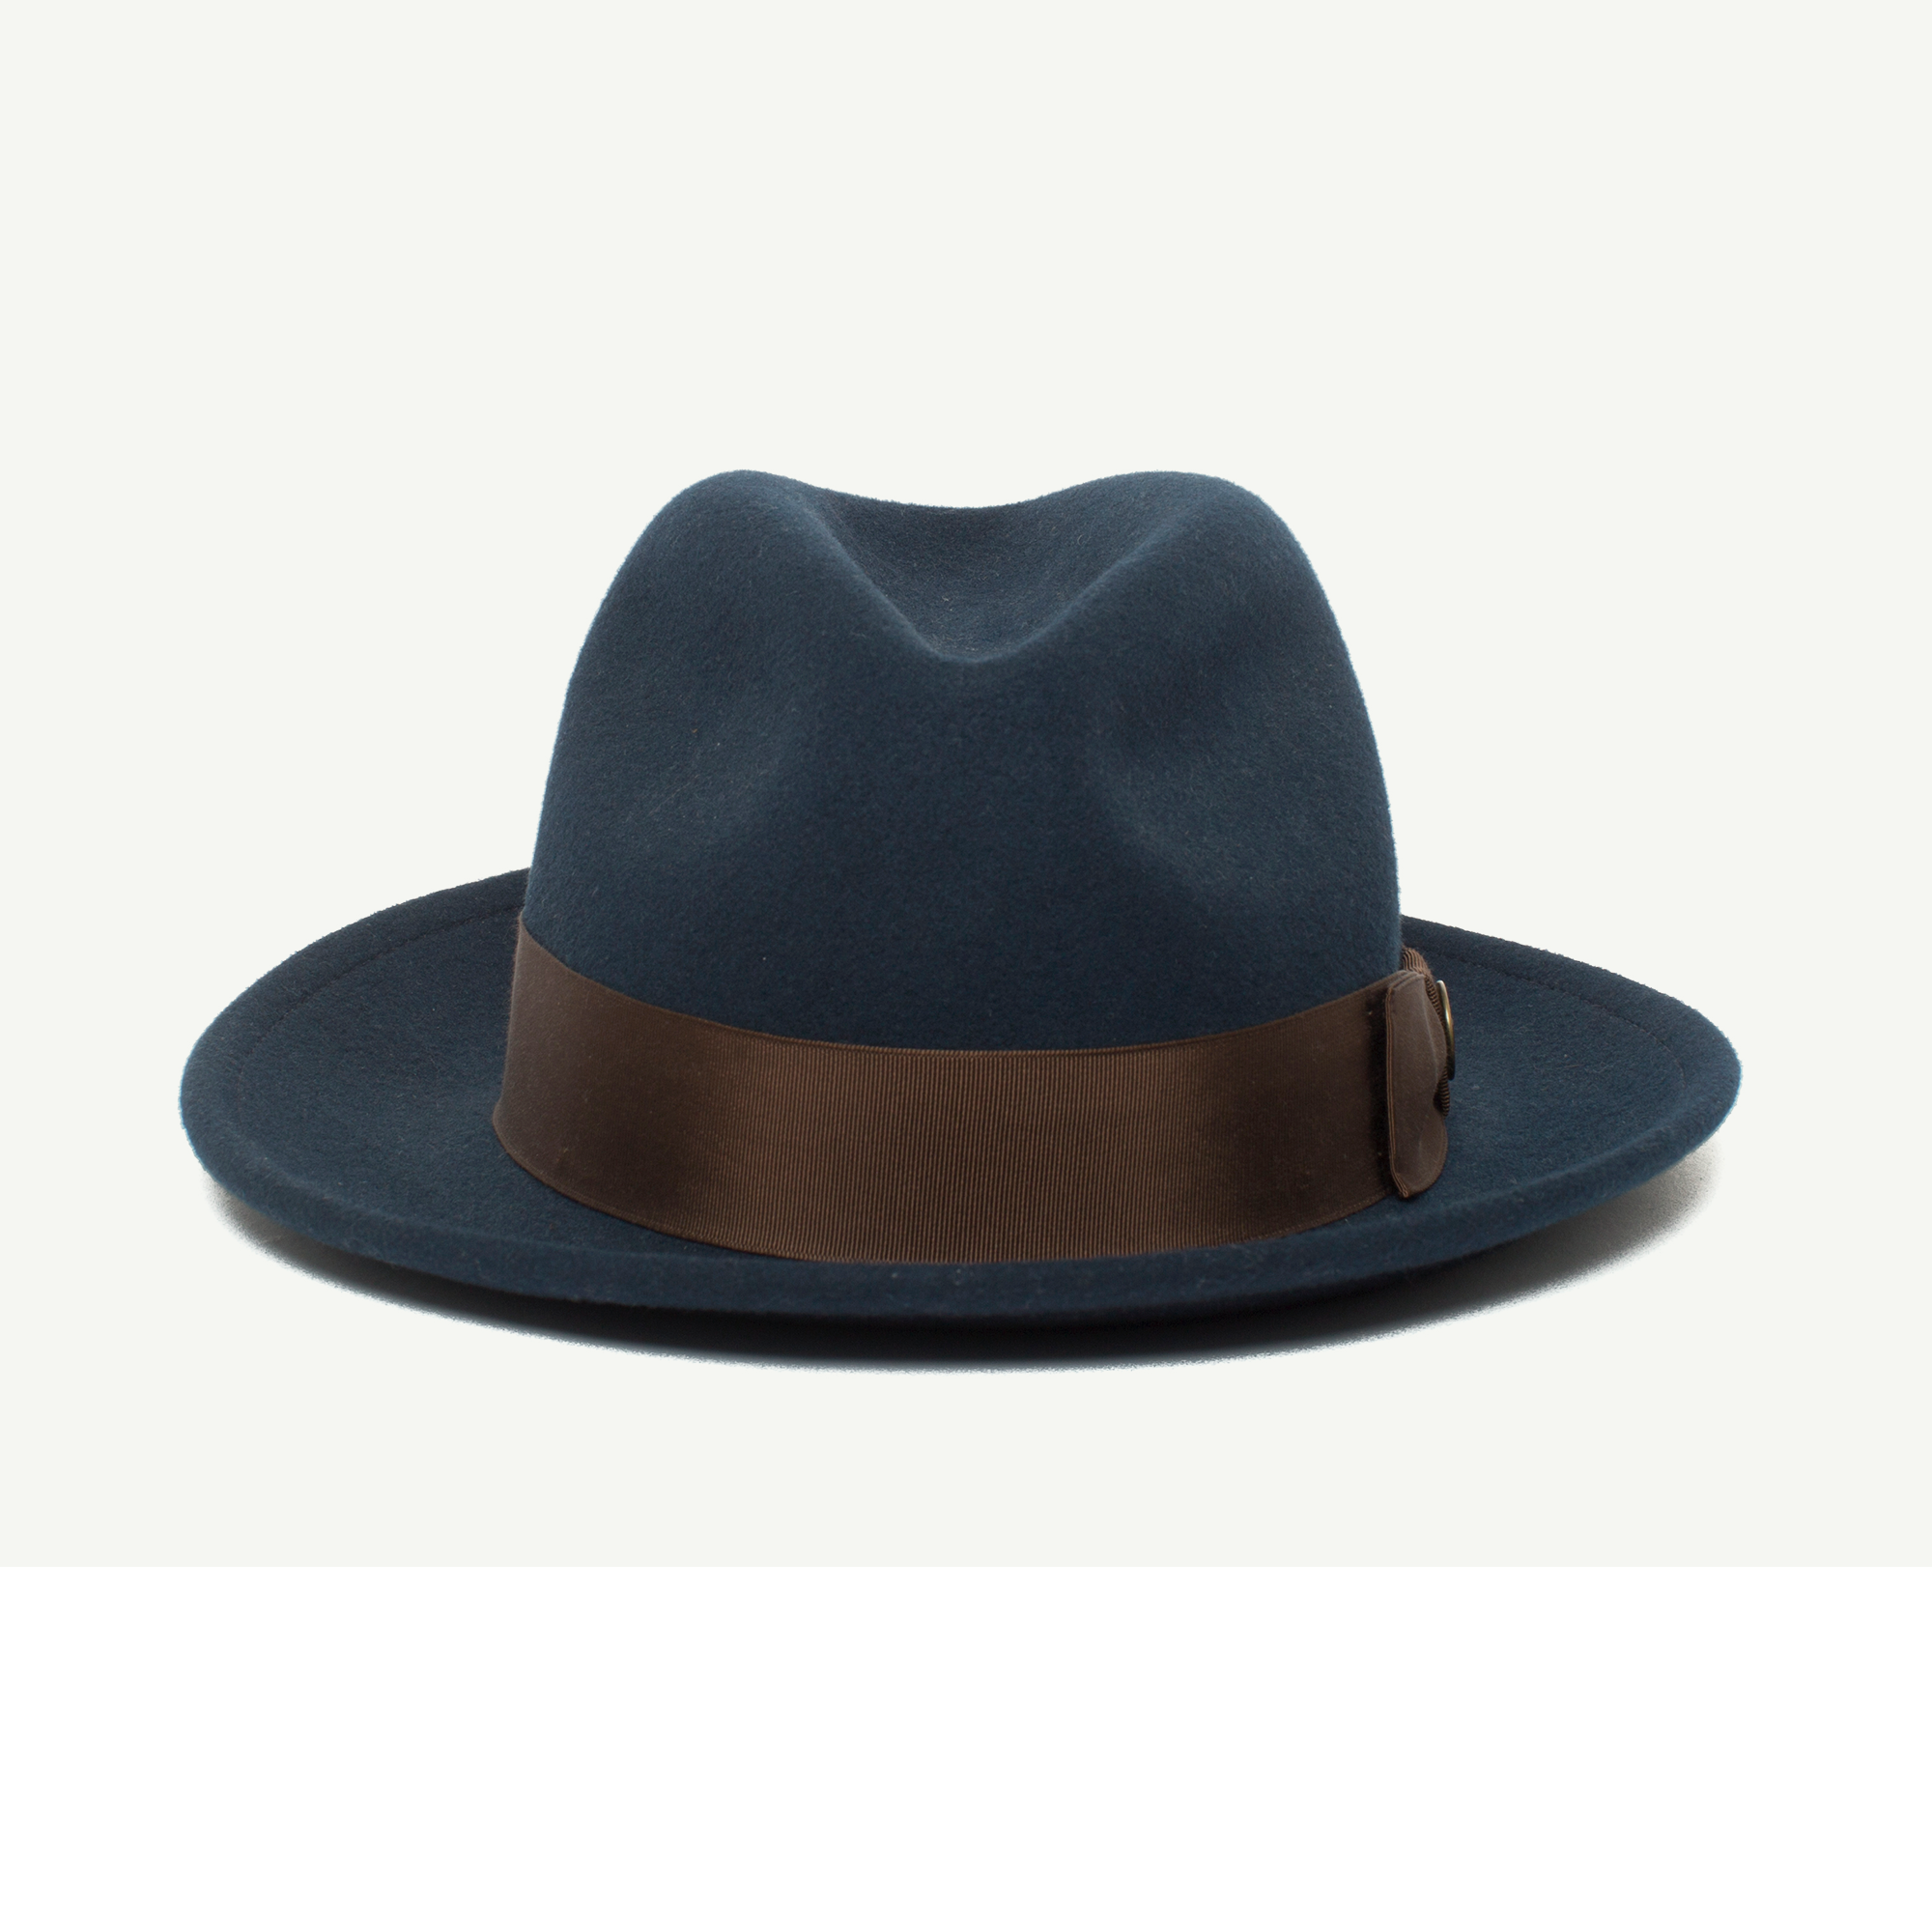 Dean The Butcher Felt Fedora Hat | Goorin Bros. Hat Shop